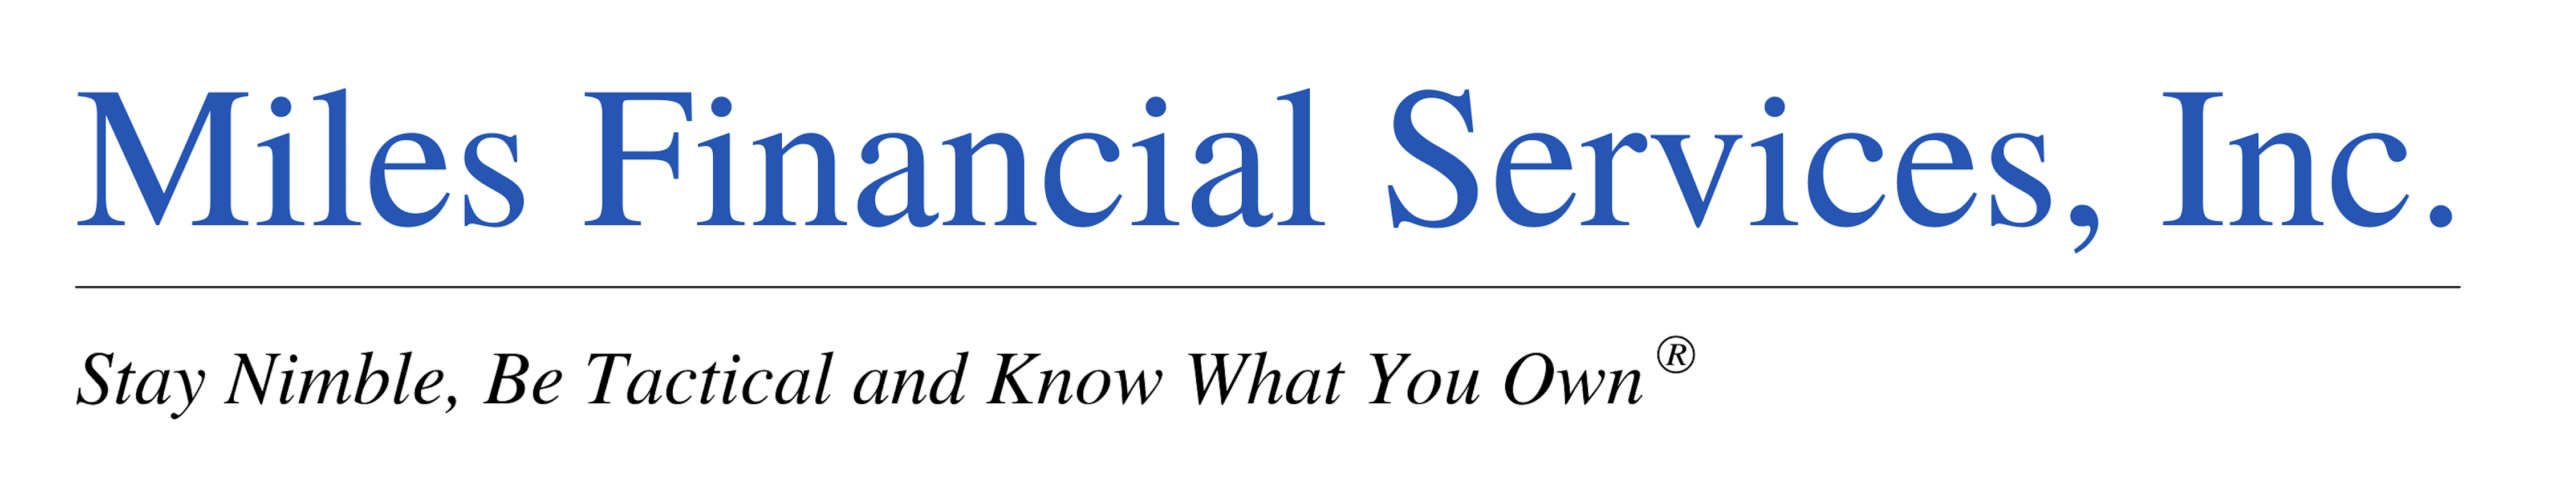 Miles Financial Services, Inc.